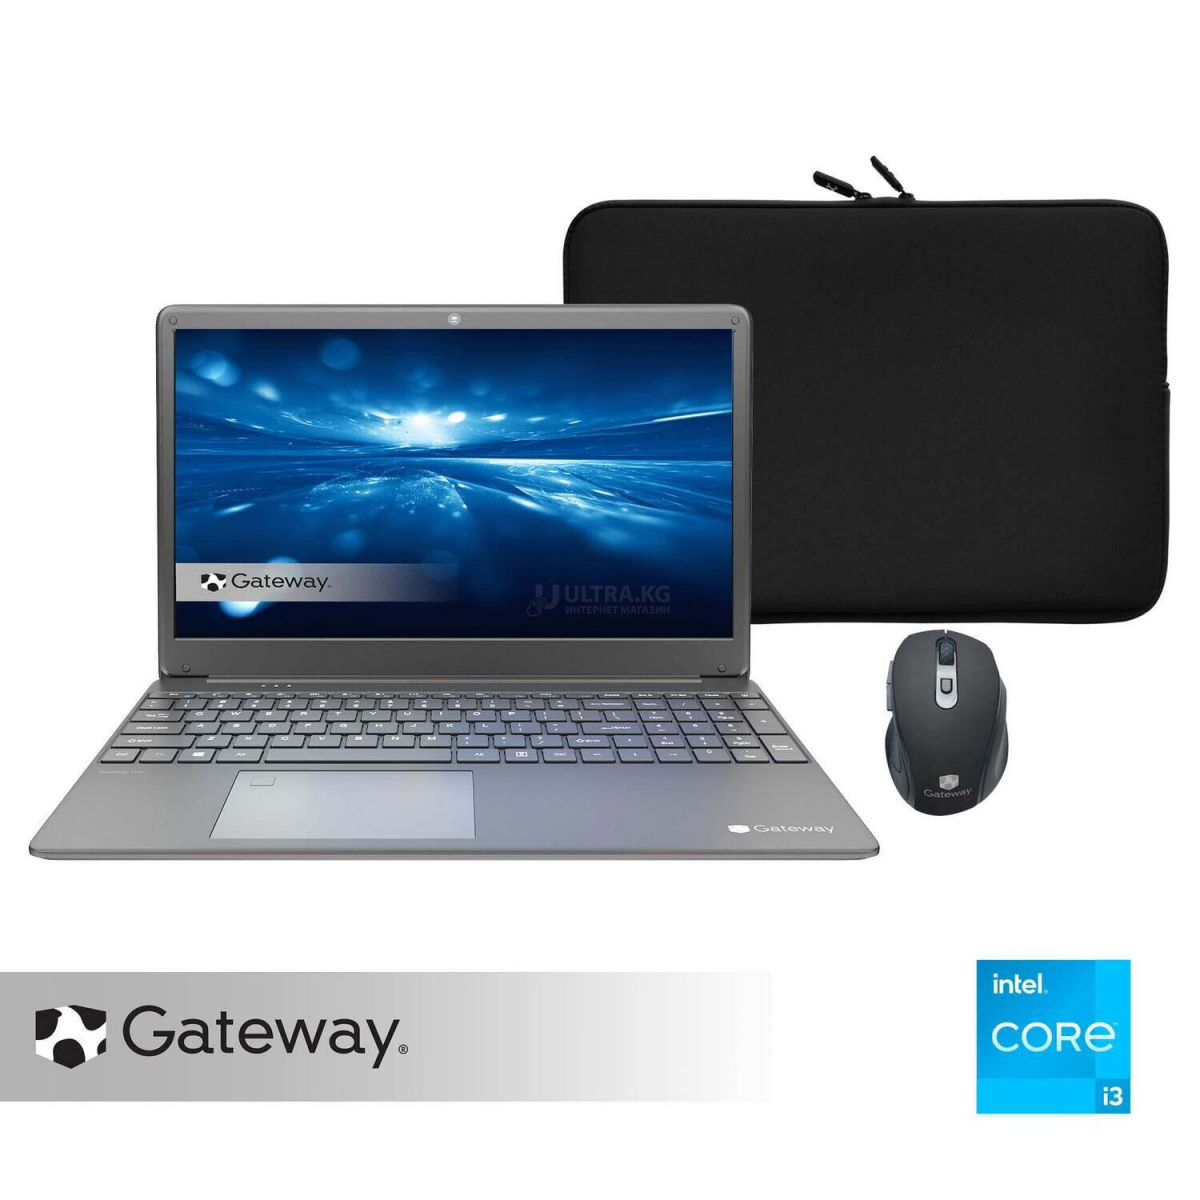 Ноутбук Gateway Ultra Slim i3-1115g4. Ноутбук Gateway 15 Core ¡3. Intel Core i3-1115g4. Gateway 15.6 Ultra Slim. Процессор intel i3 1115g4